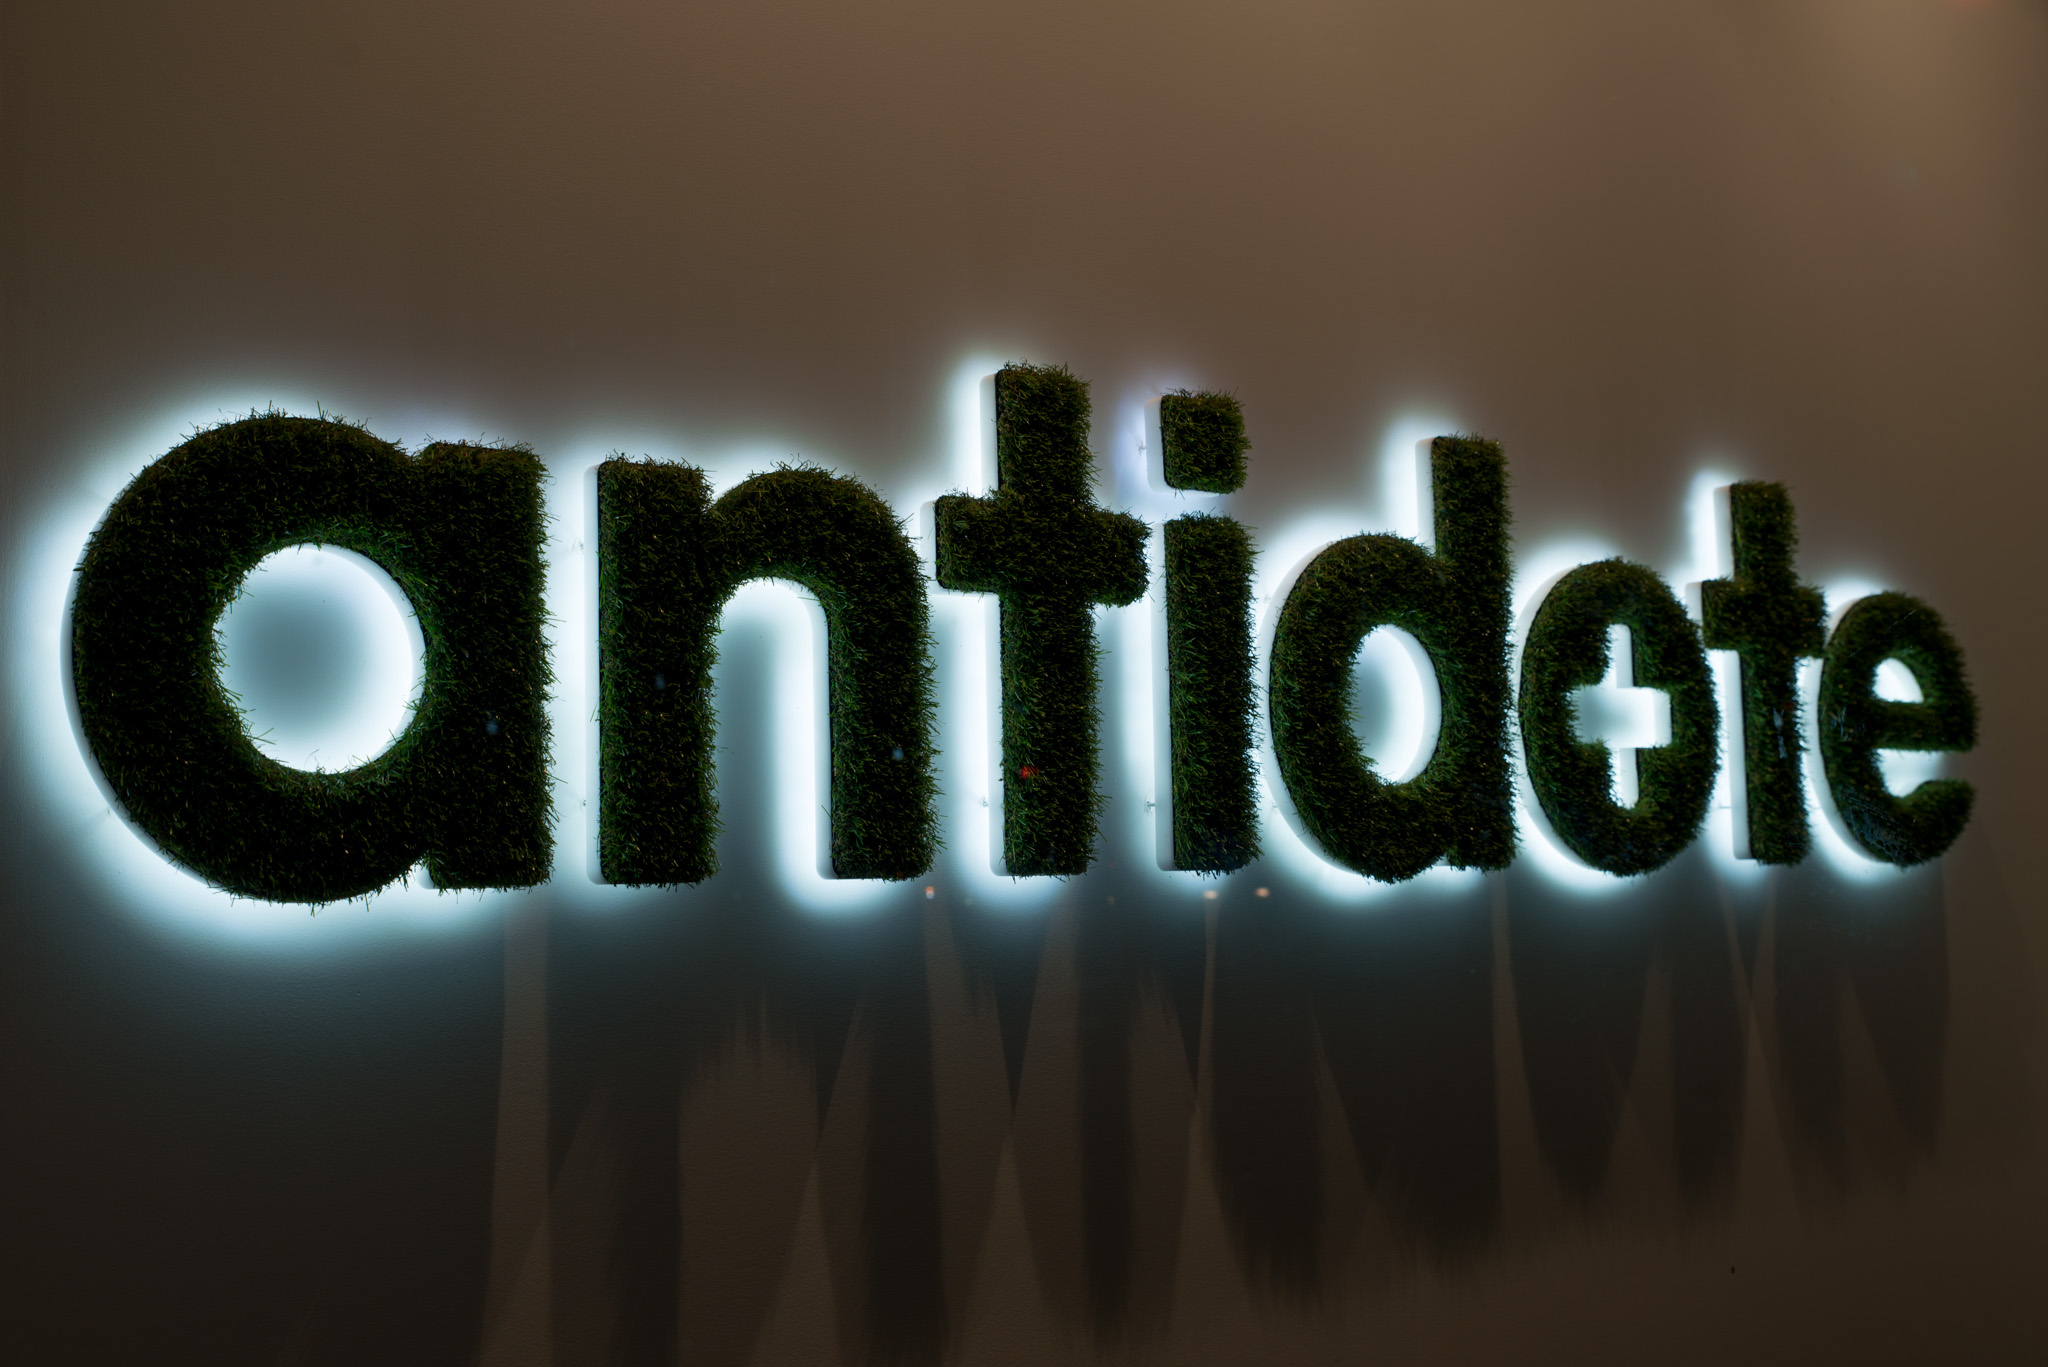 Gardens Antidote illuminated sign NZSDA award winner